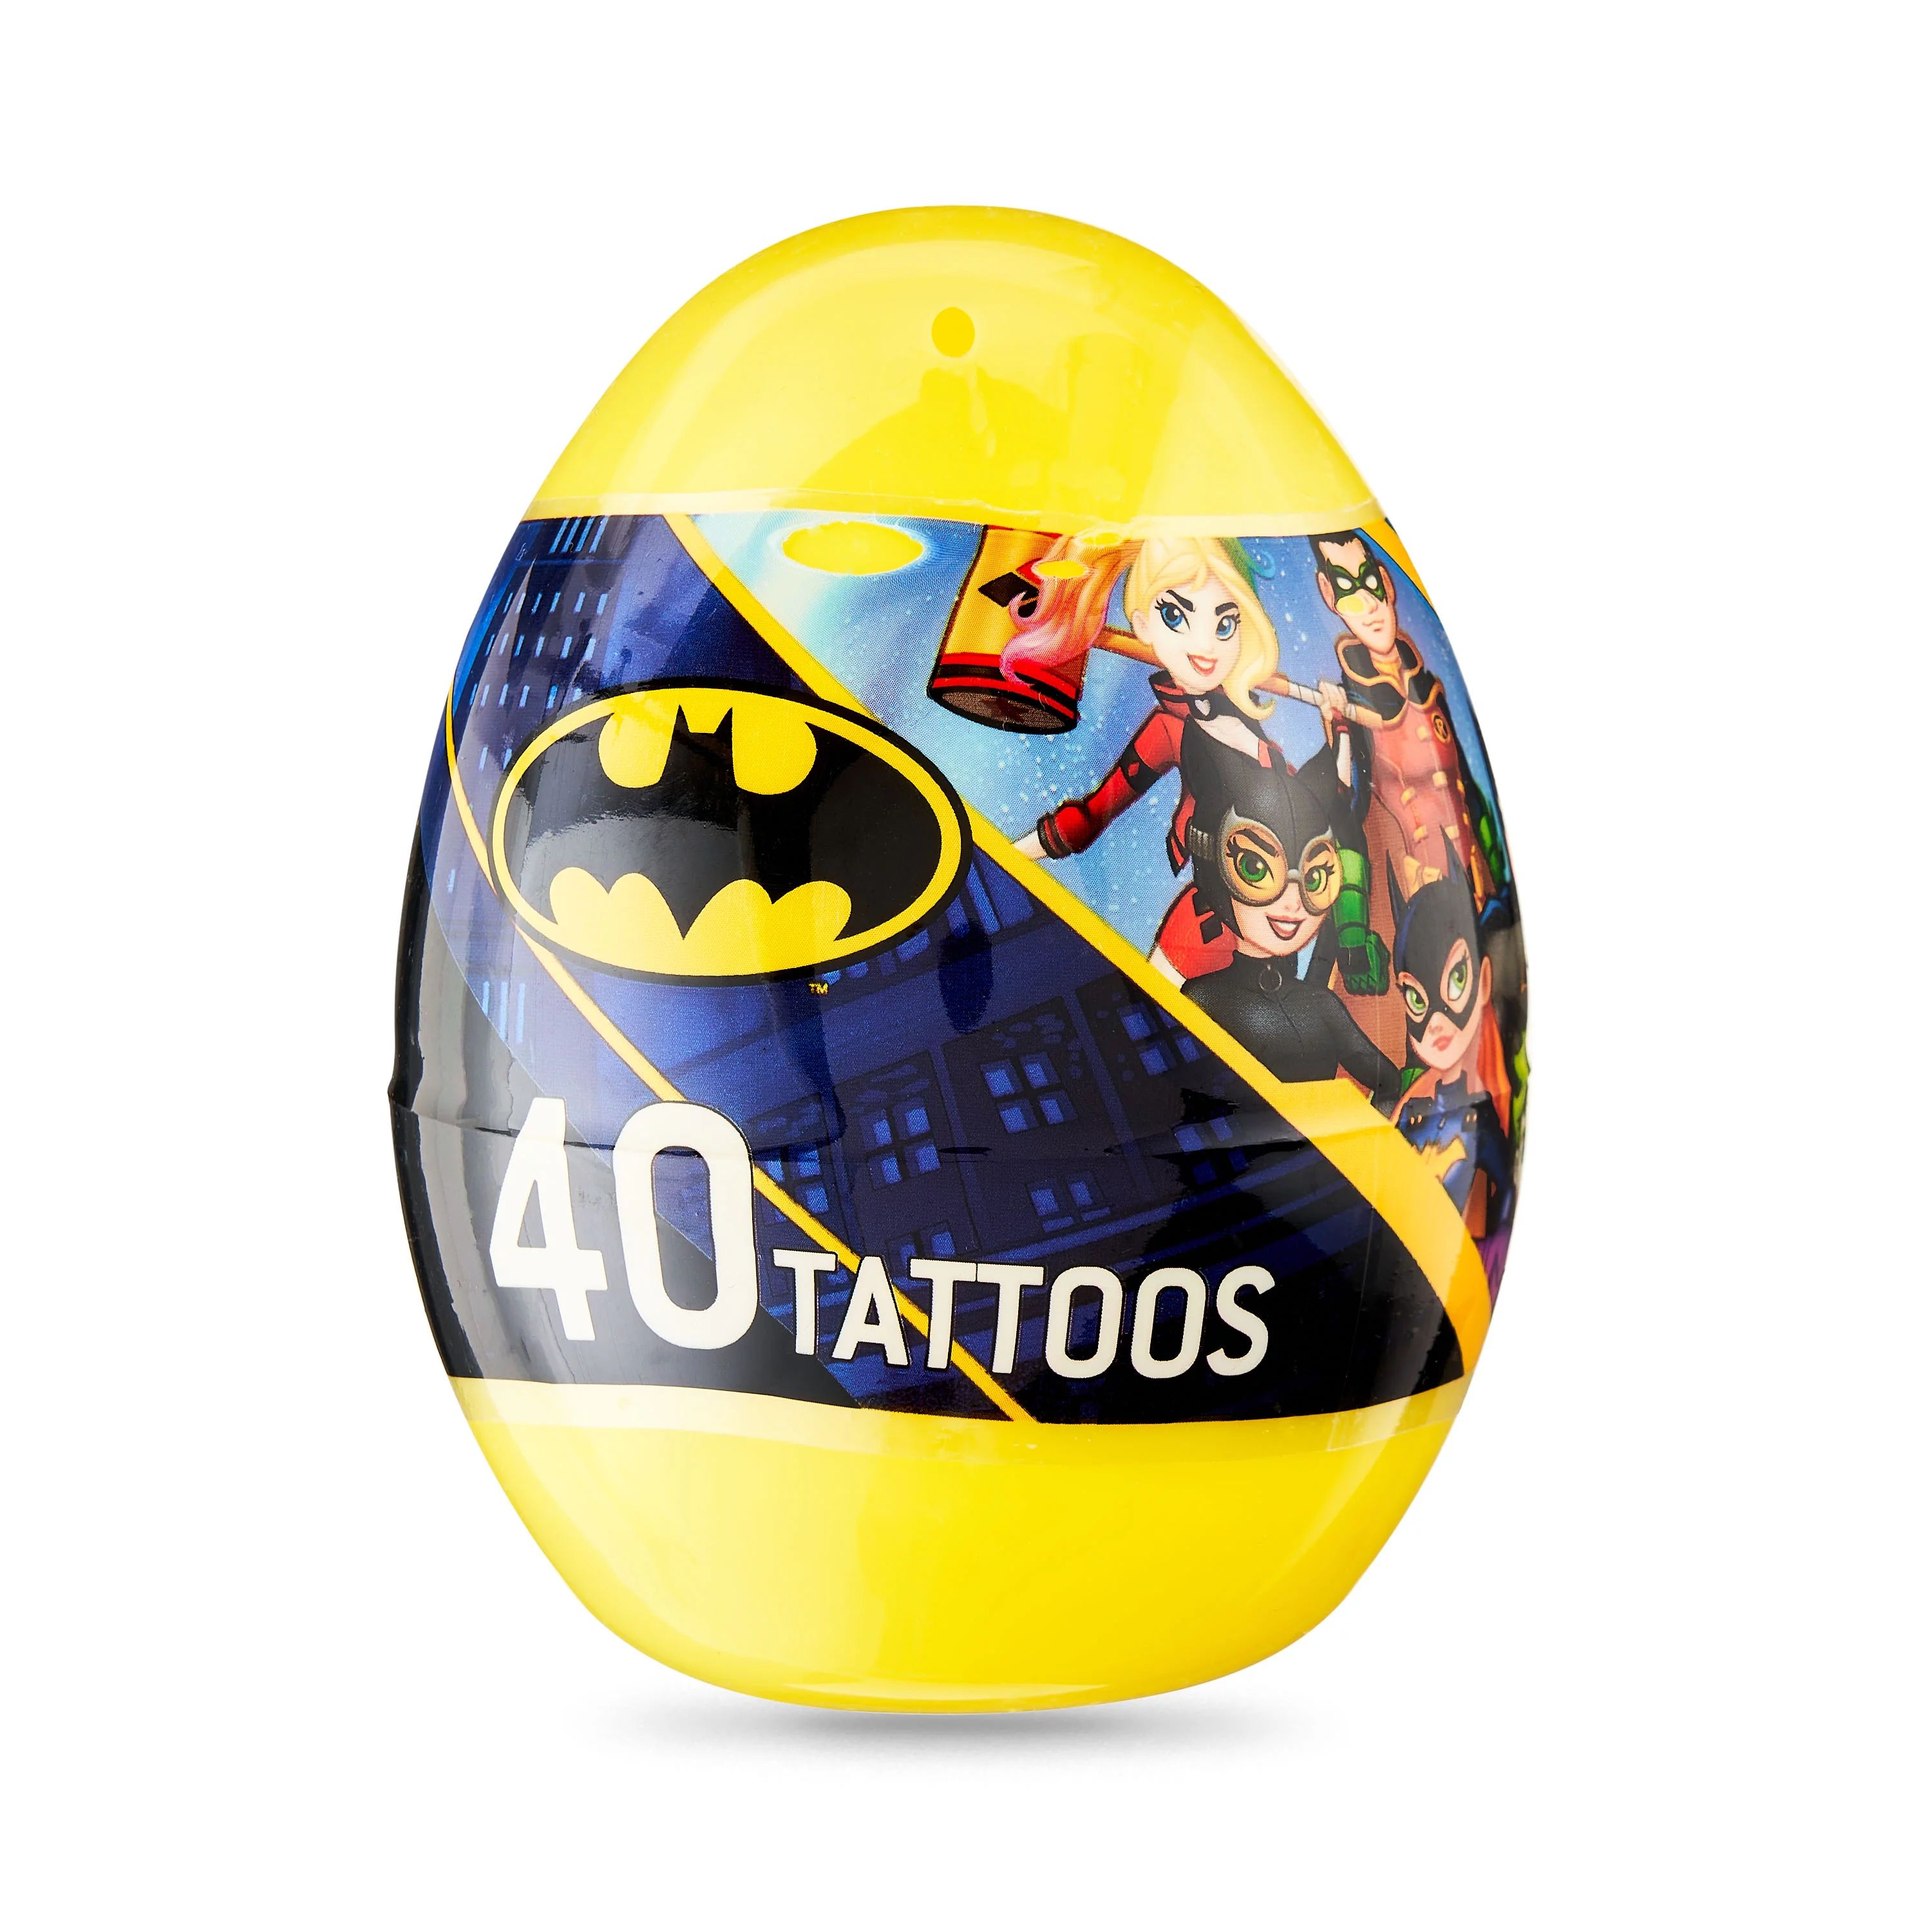 Way To Celebrate Batman Jumbo Plastic Egg, 40 Tattoos, Temporary, Easter, Yellow | Walmart (US)